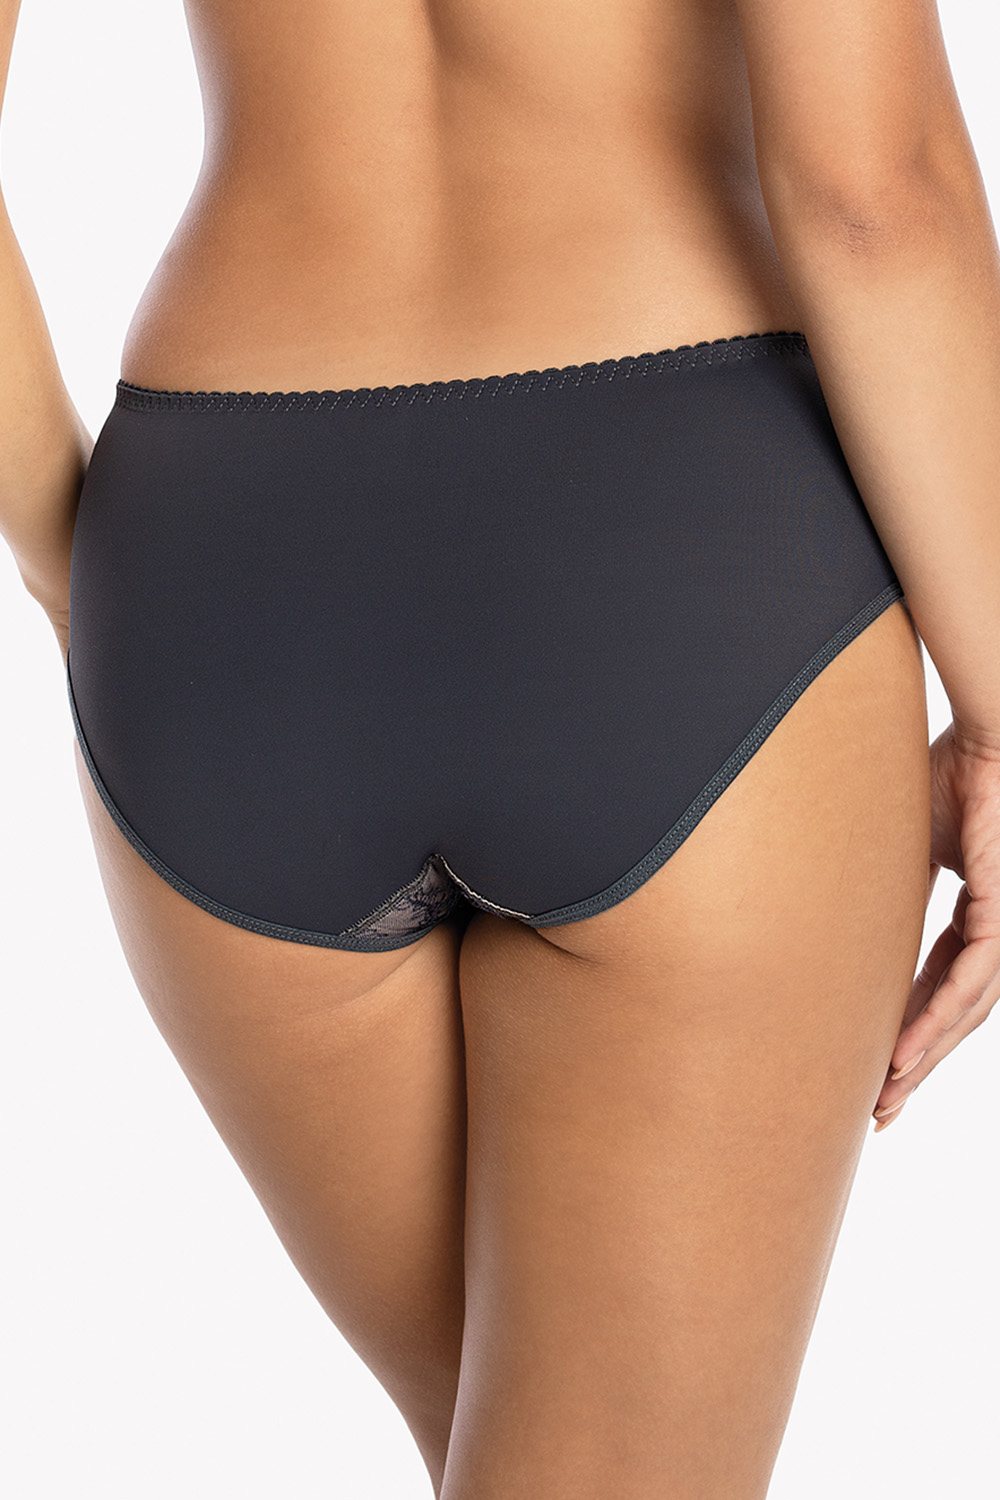 Panties model 163352 Gaia grey Ladies